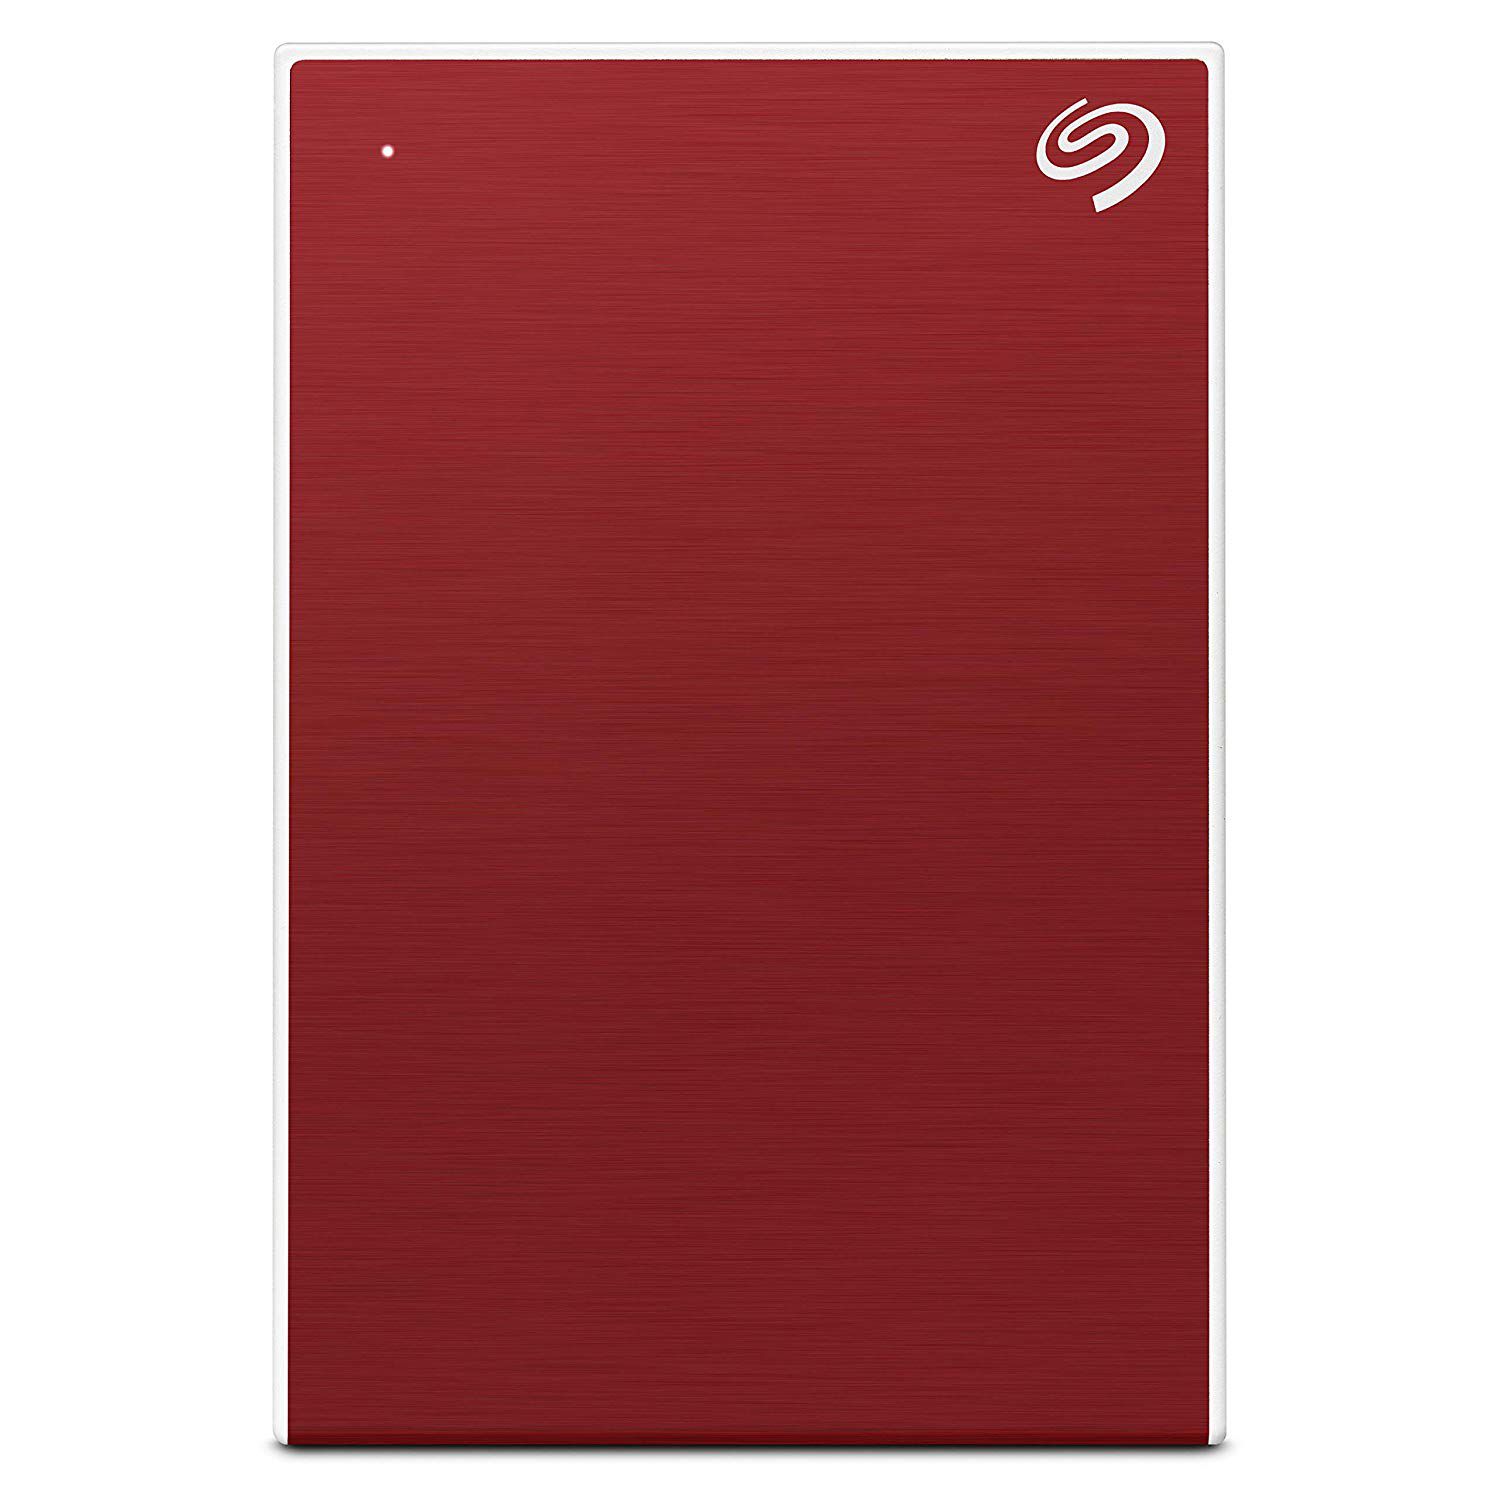     			Seagate 1TB Backup Plus Slim Portable External Hard Drive (Red)